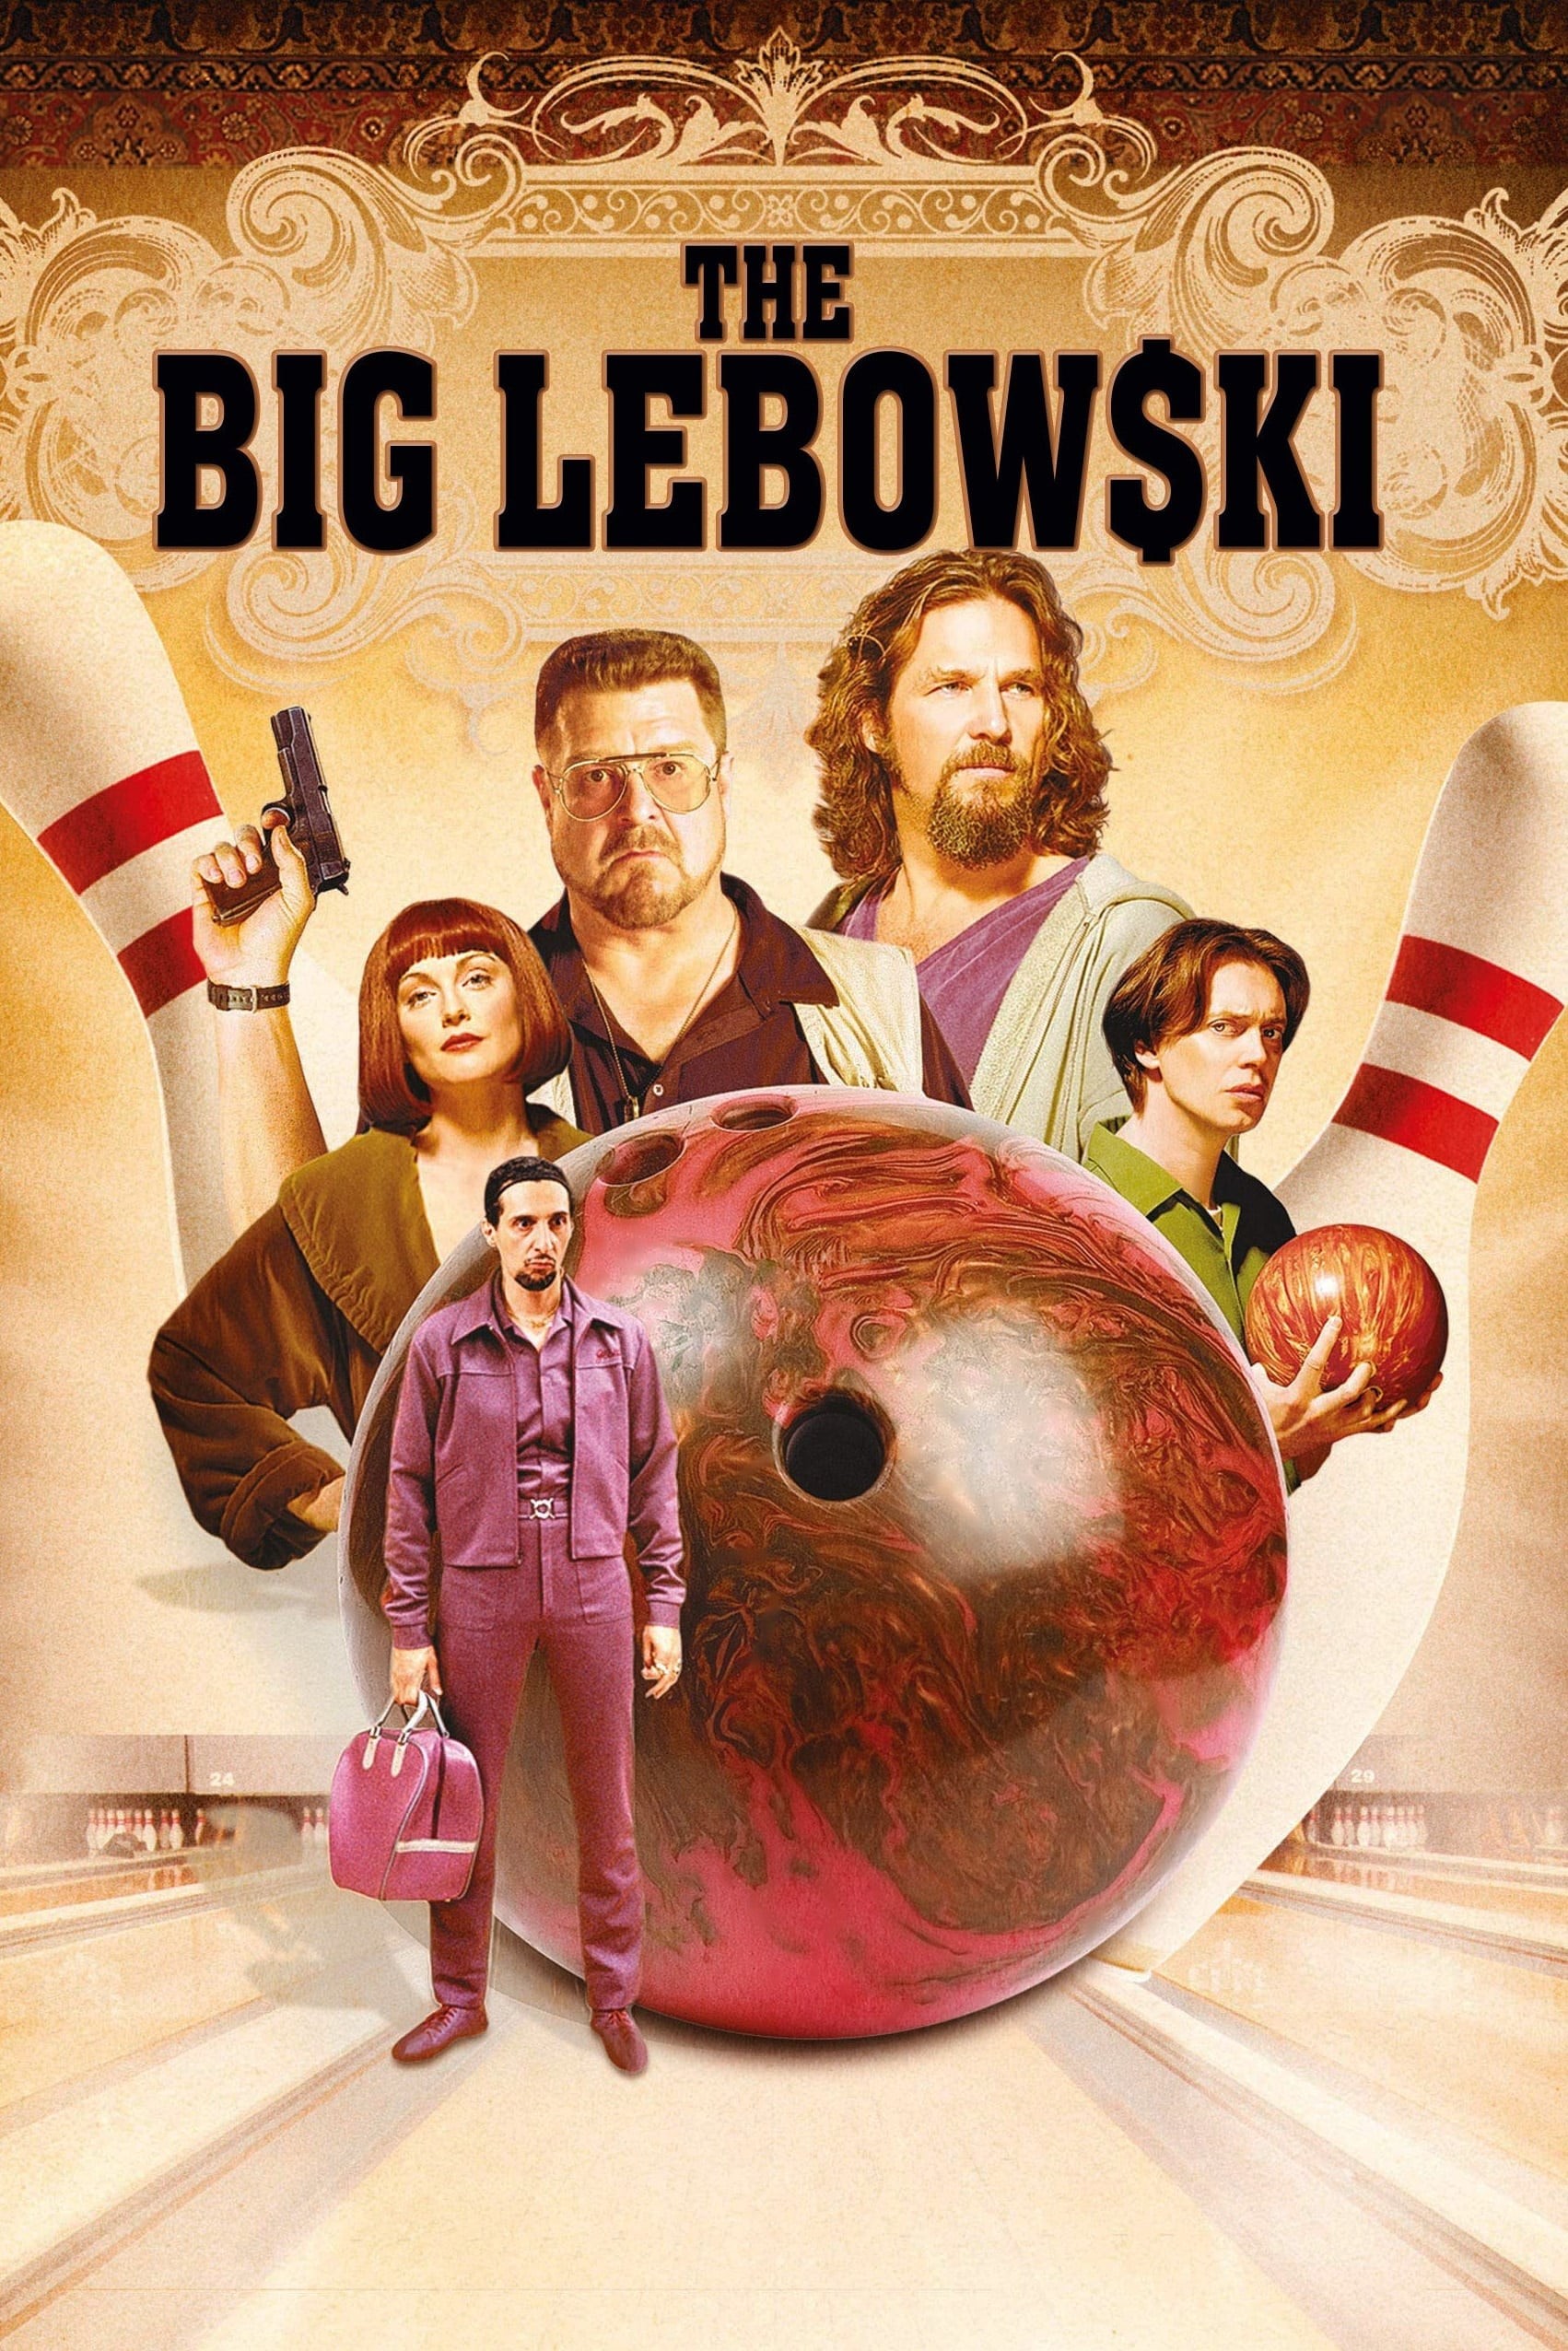 Film183: The Big Lebowski